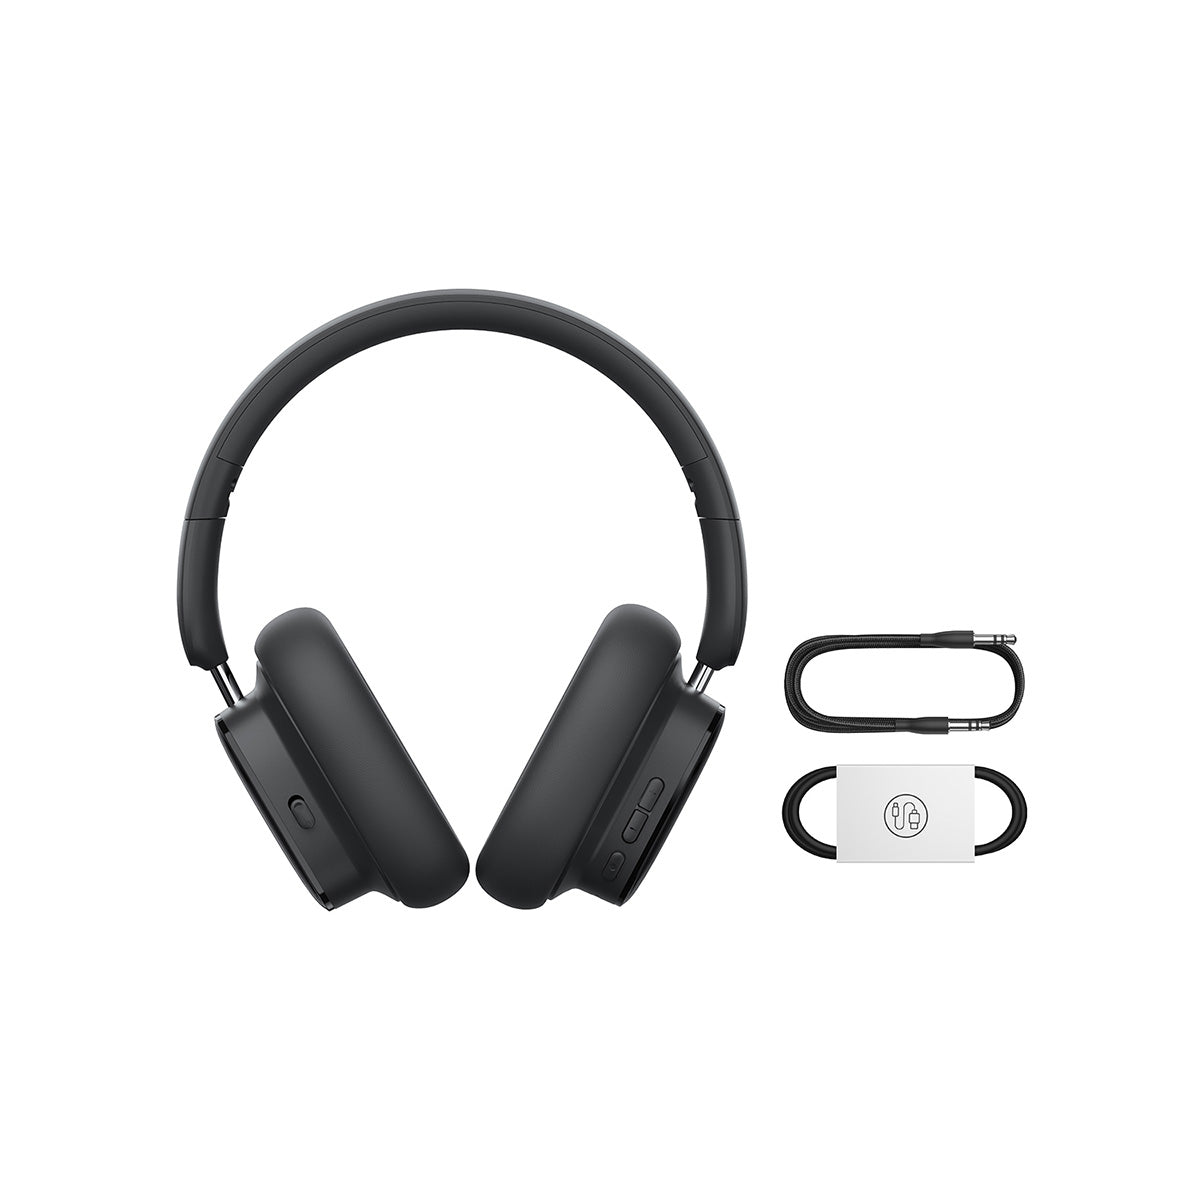 Baseus_Bowie_H1i_Bluetooth_Headphone_Package